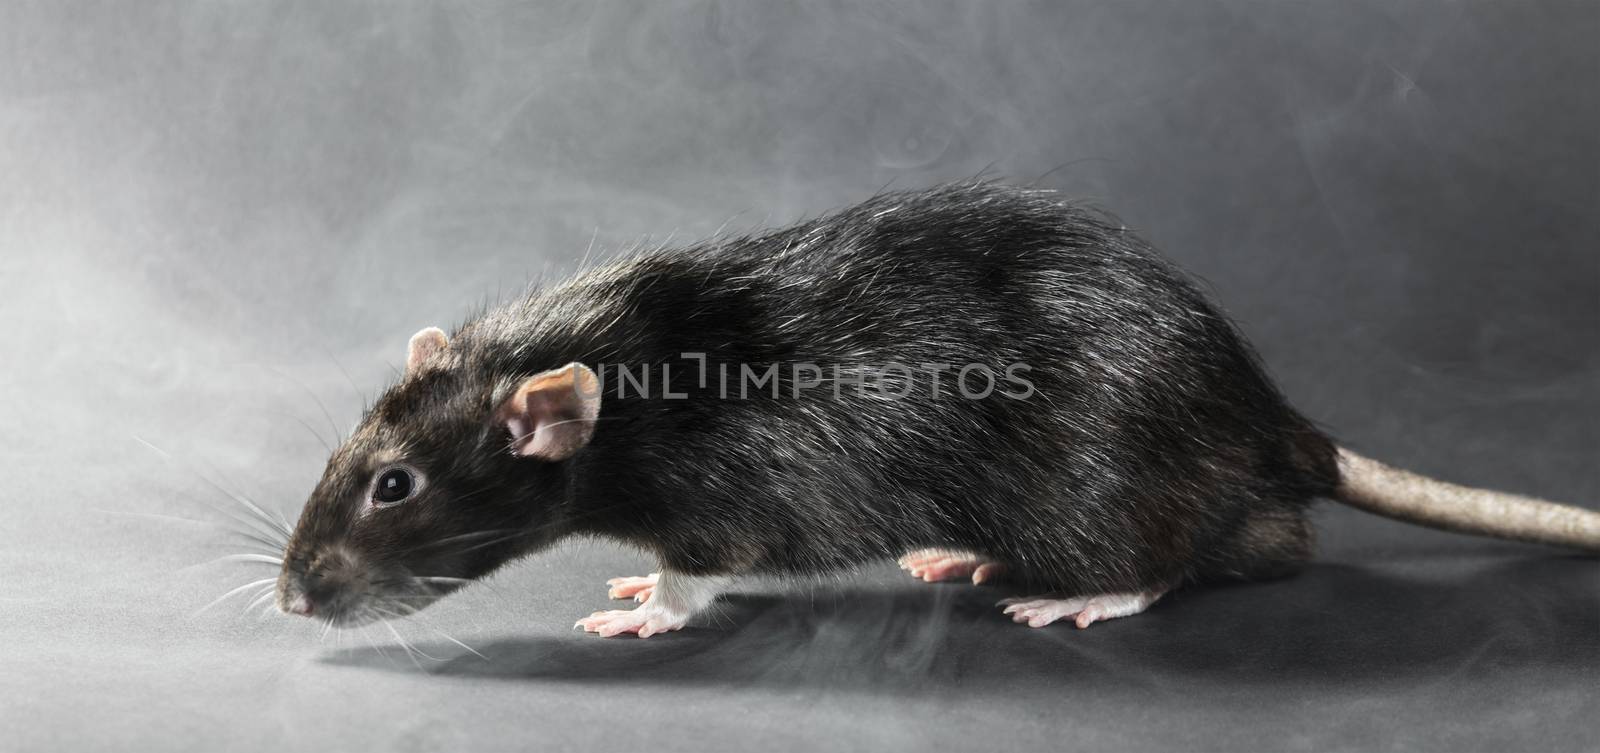 Animal gray rat close-up on a black background